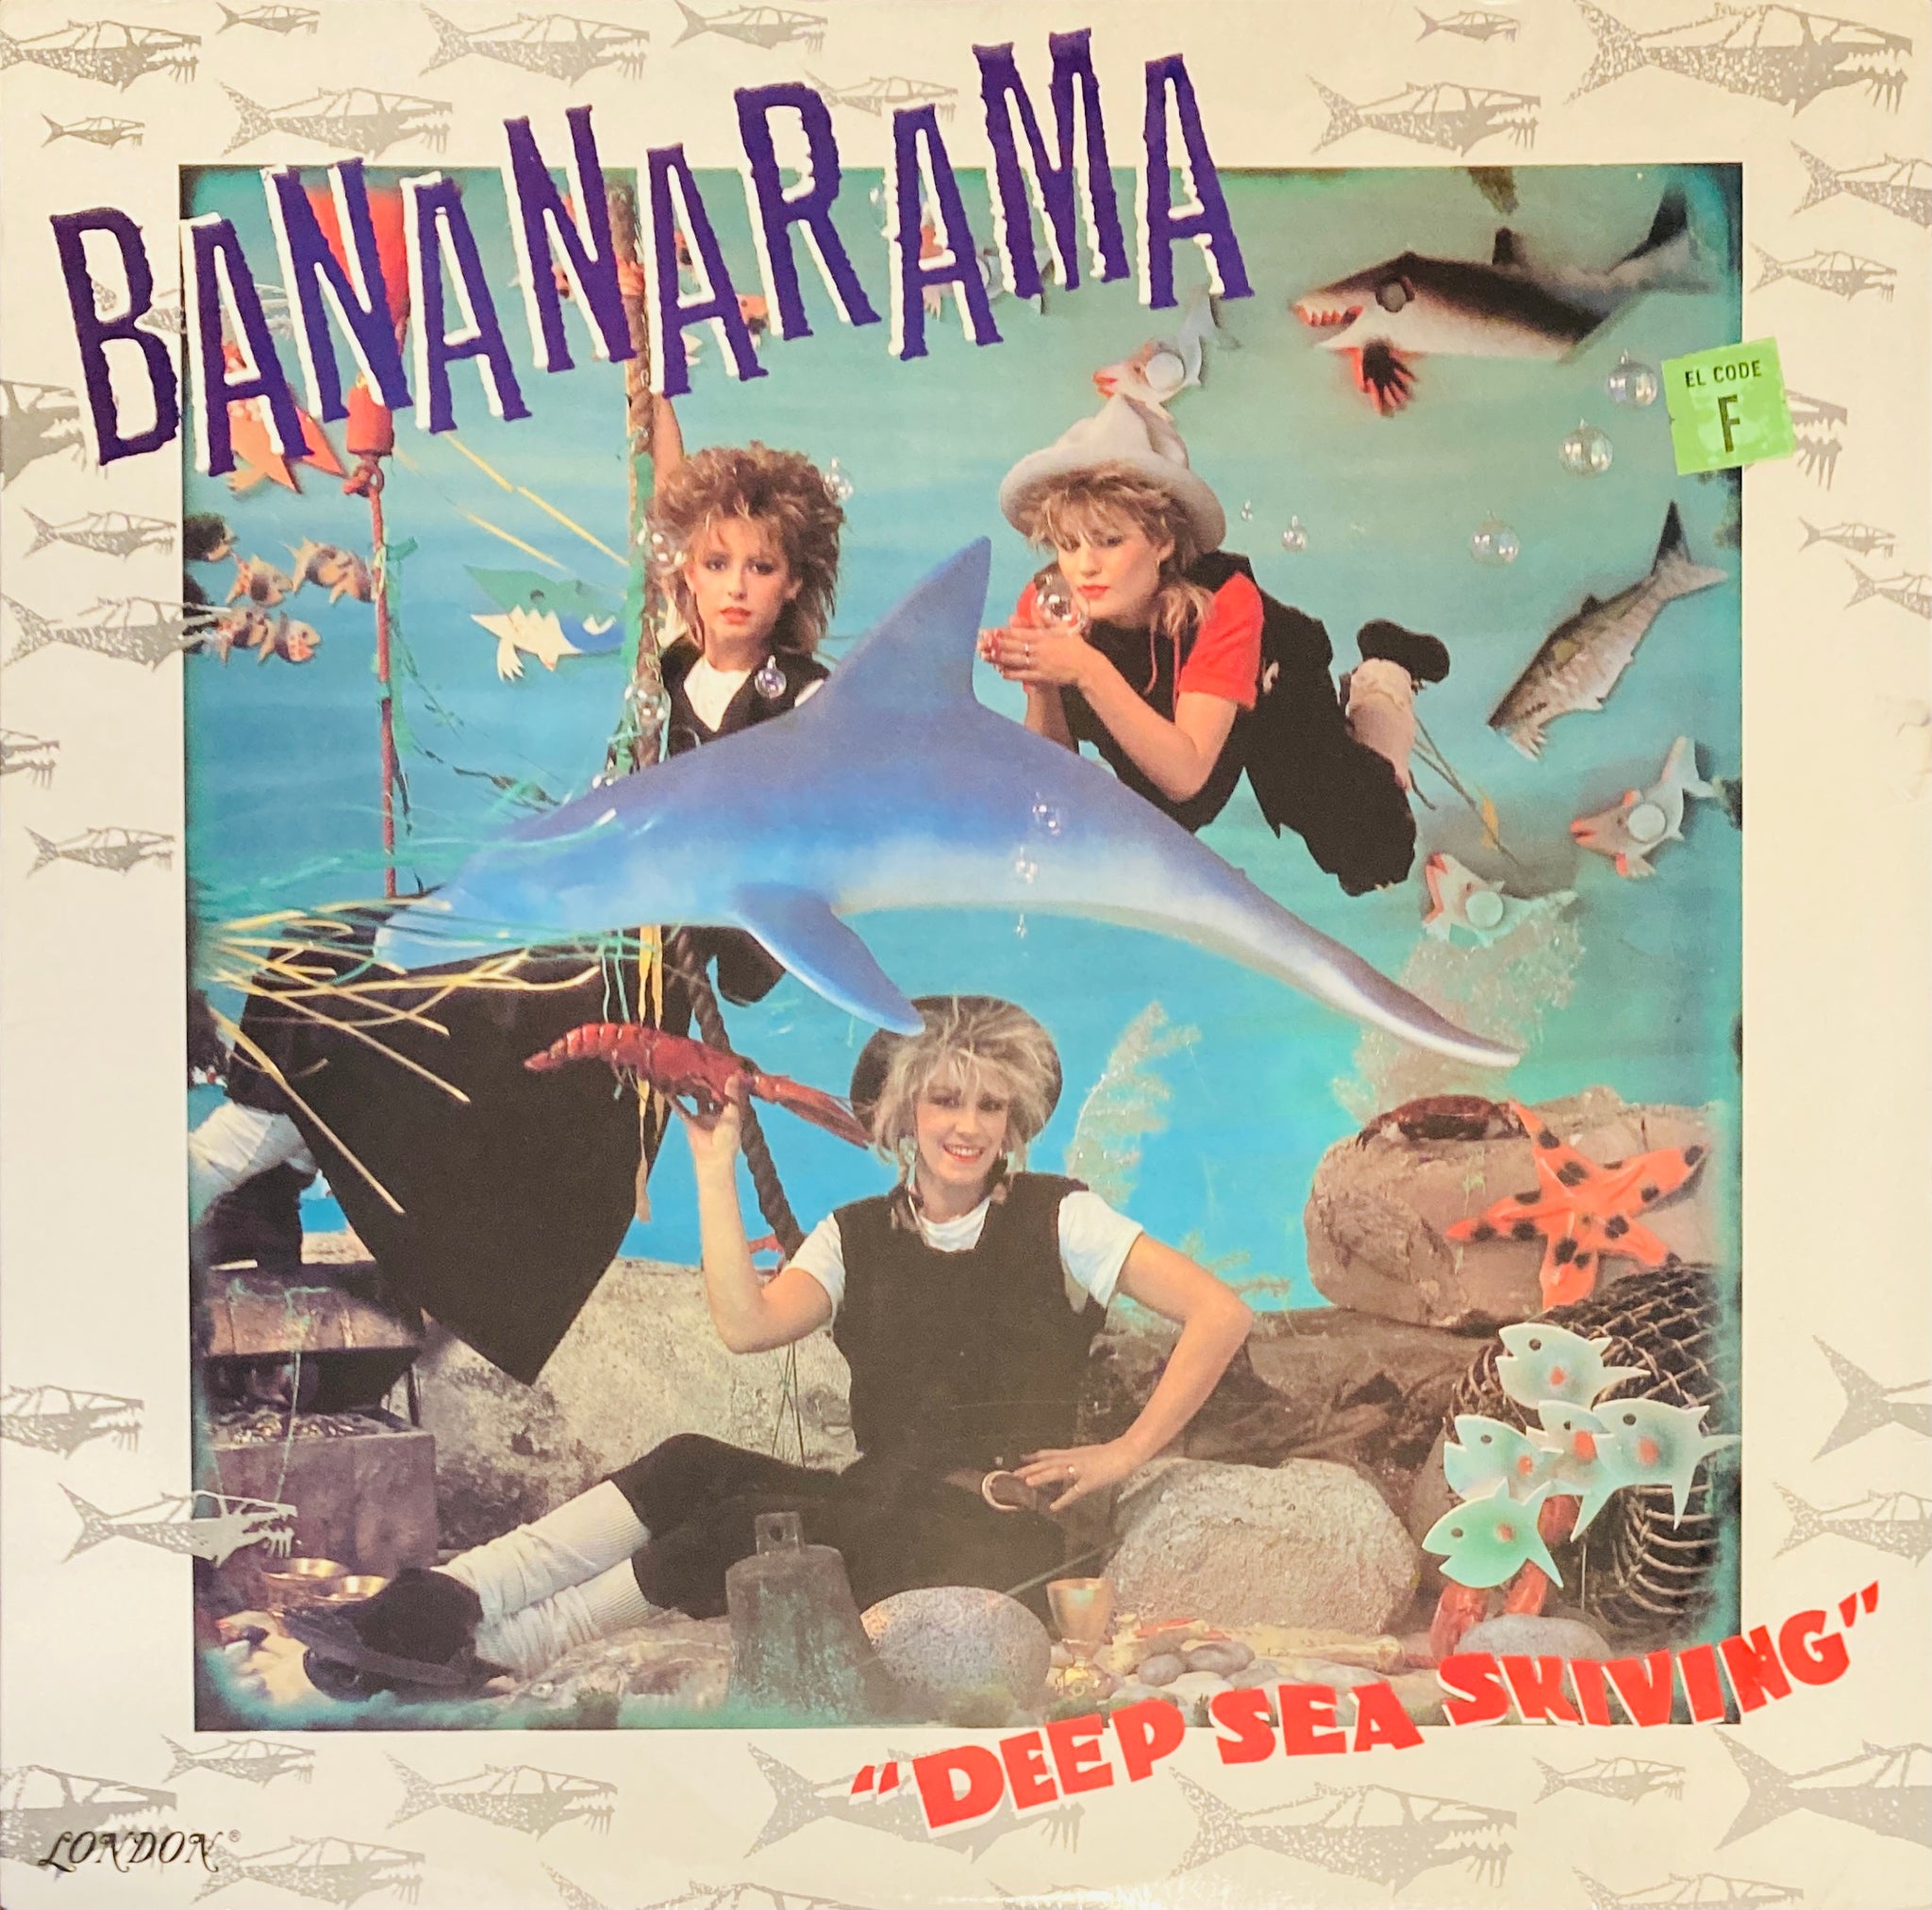 Bananarama "Deep Sea Skiving" LP (1983)